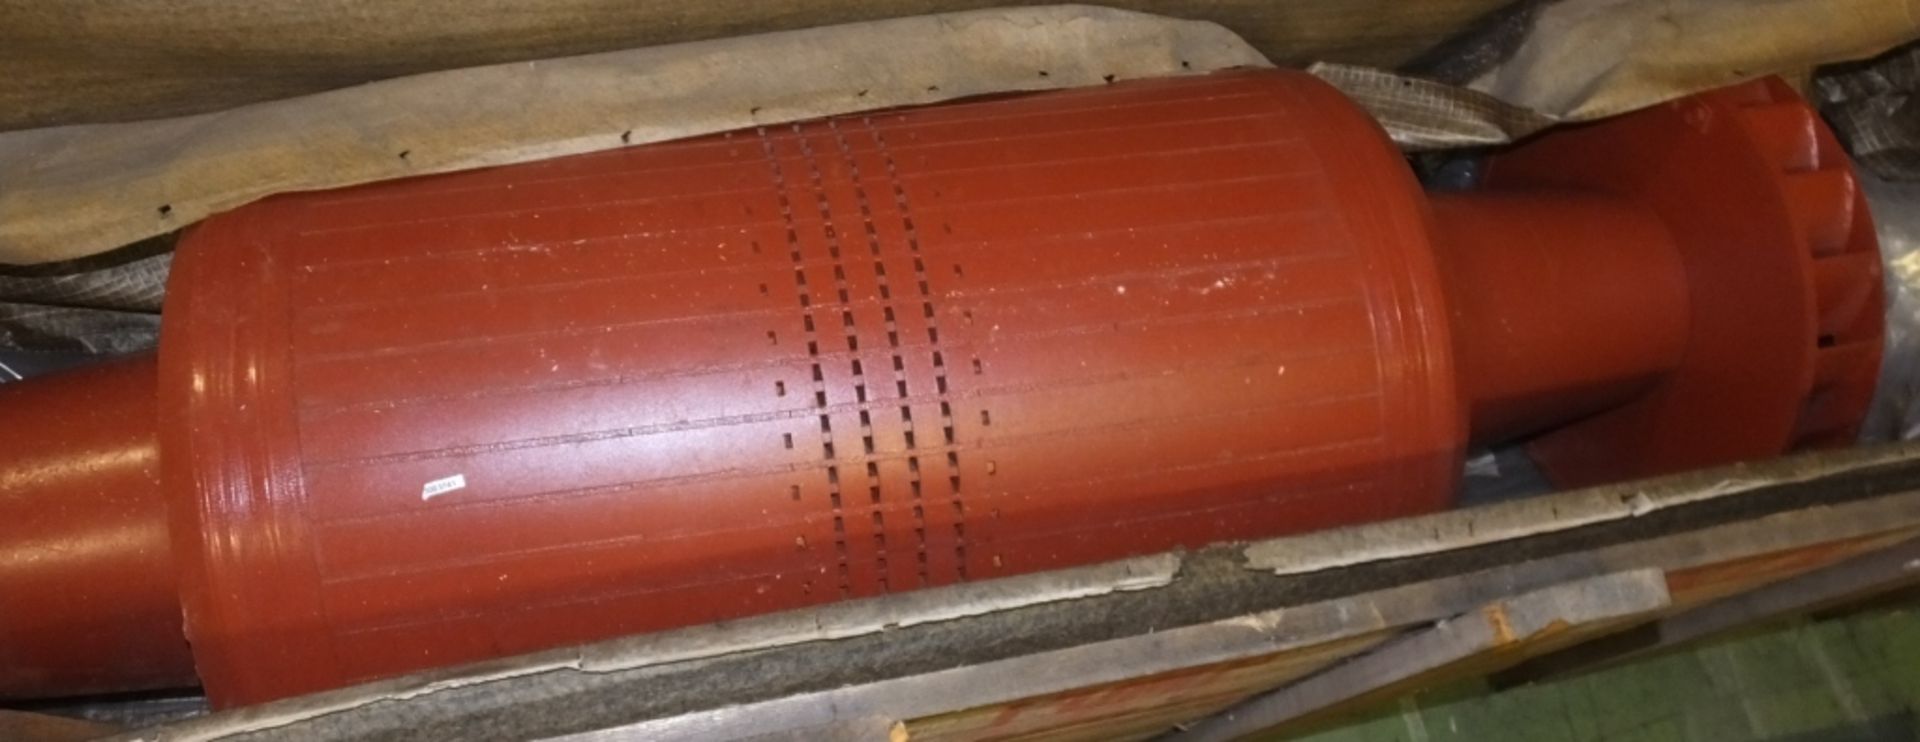 Boiler Feed Pump Rotor - Image 3 of 3